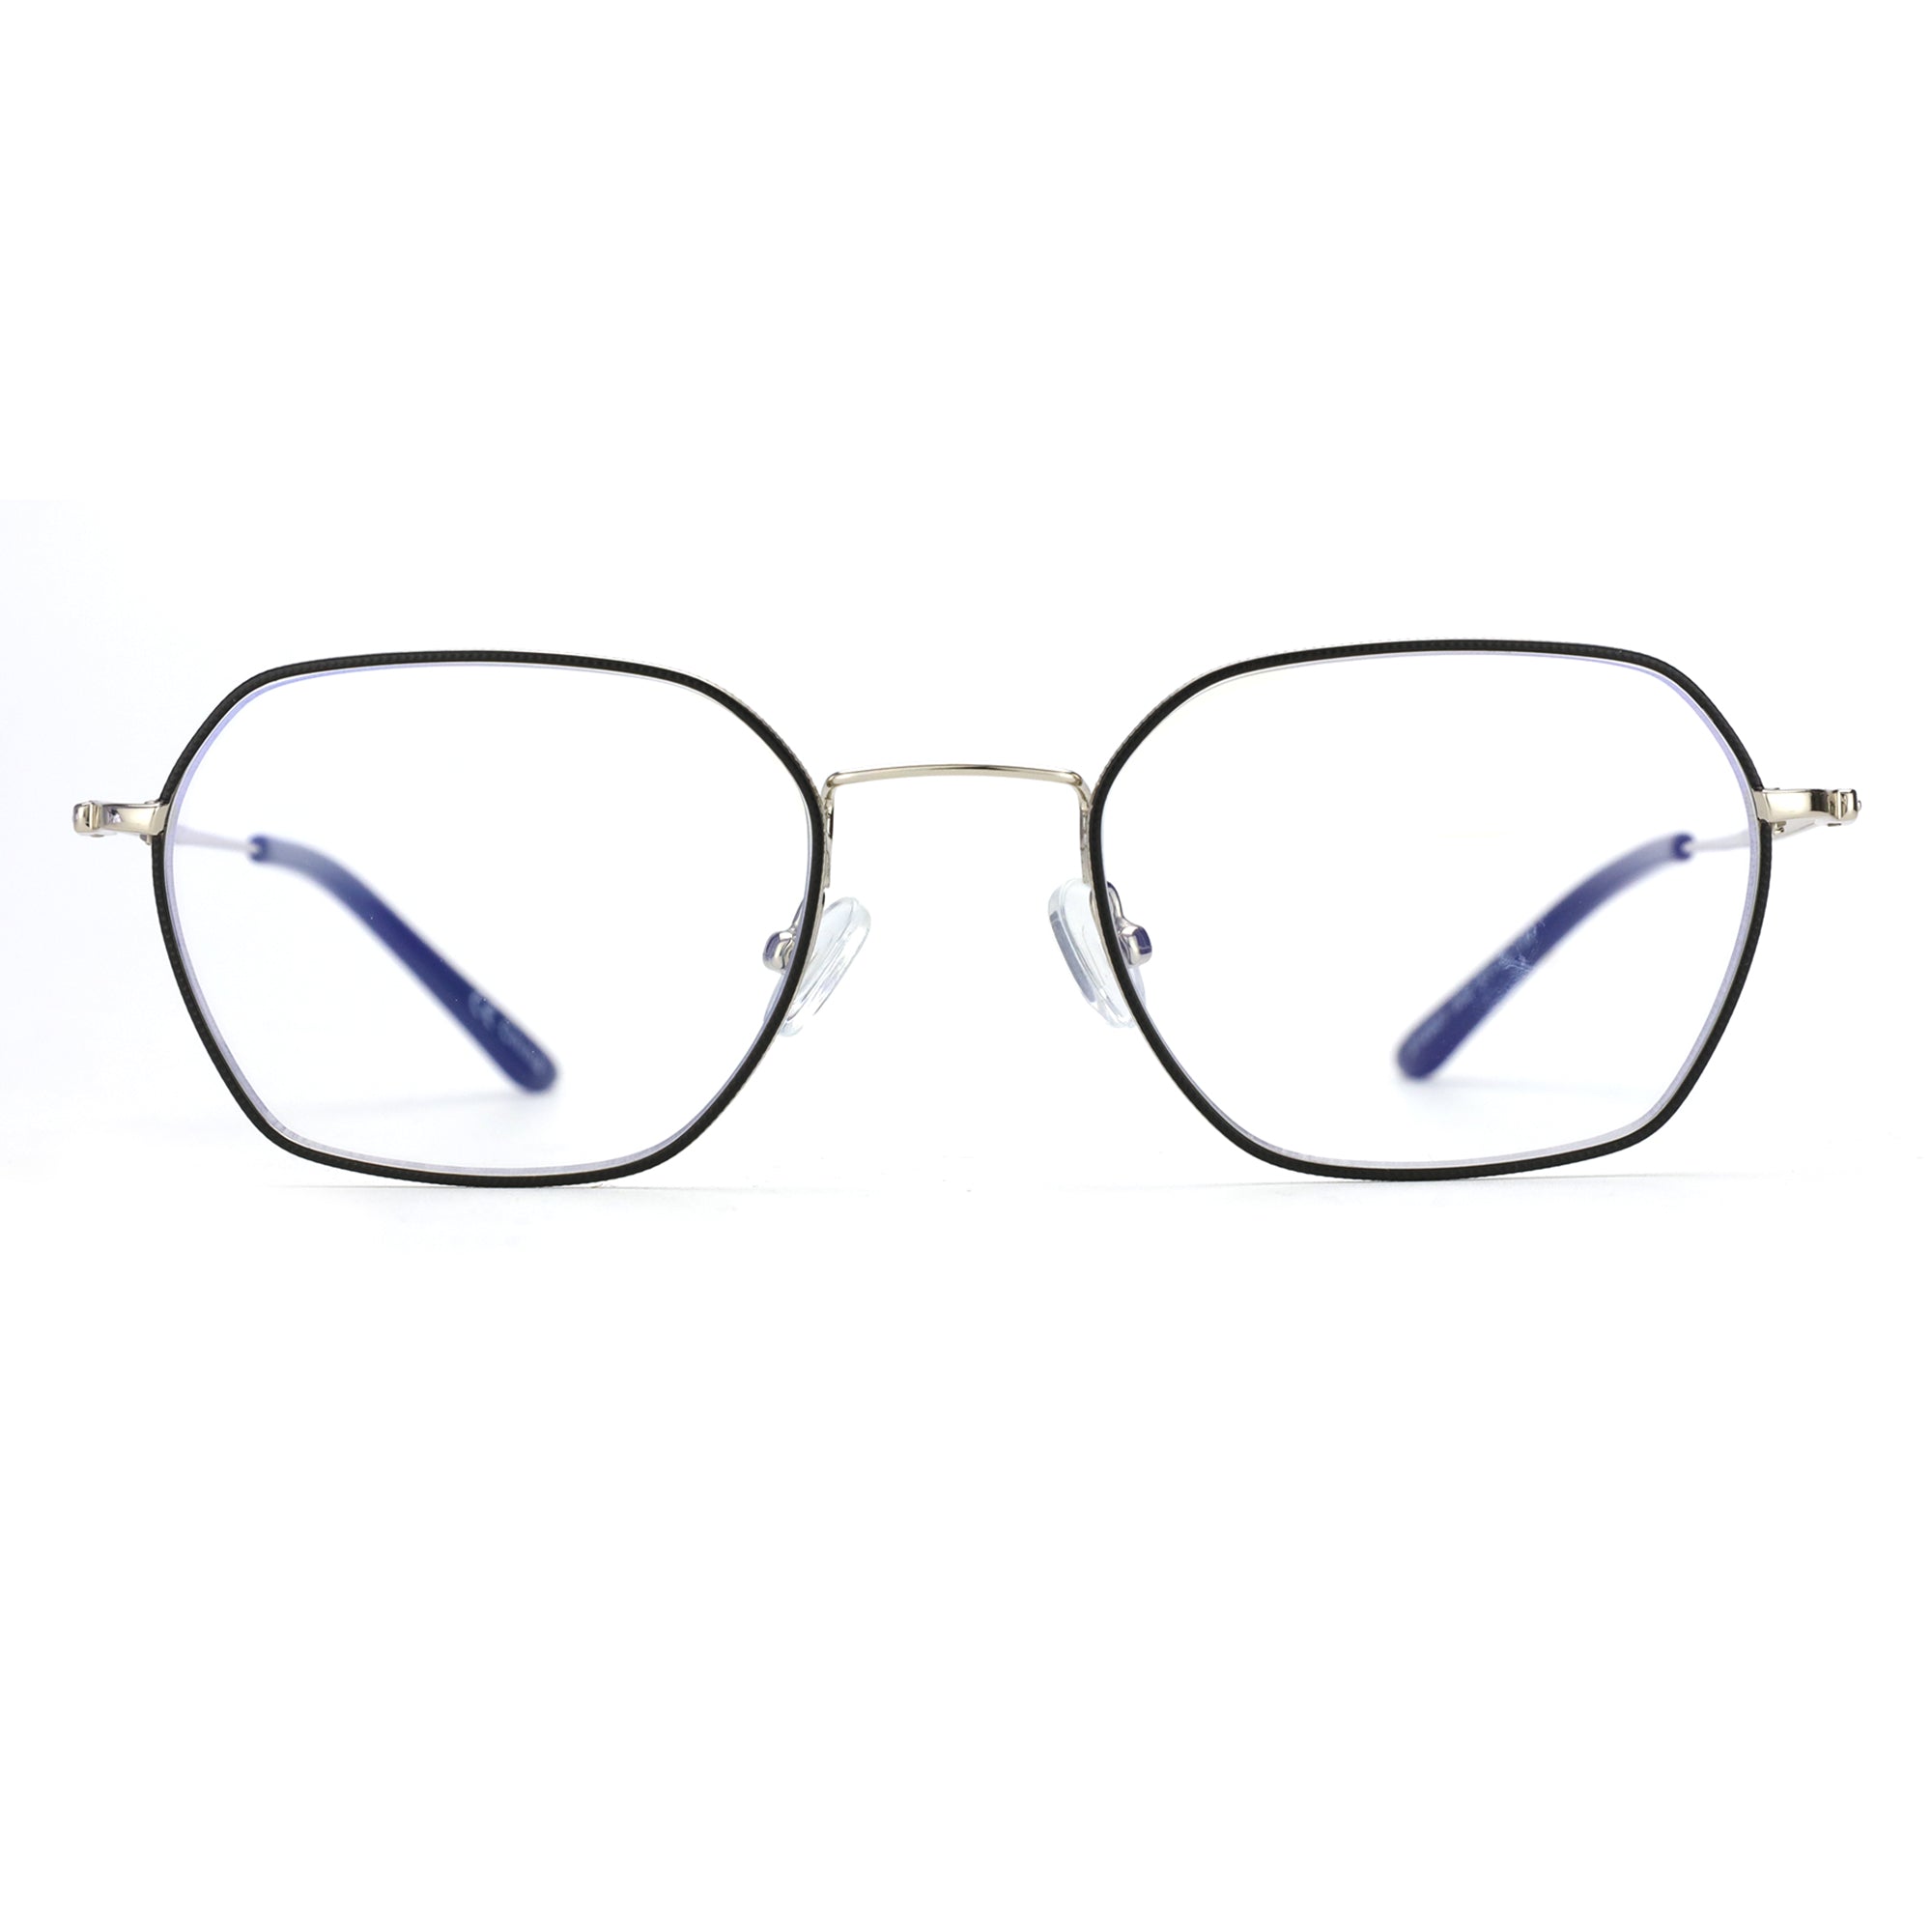 Zenottic Blue Light Blocking Glasses 